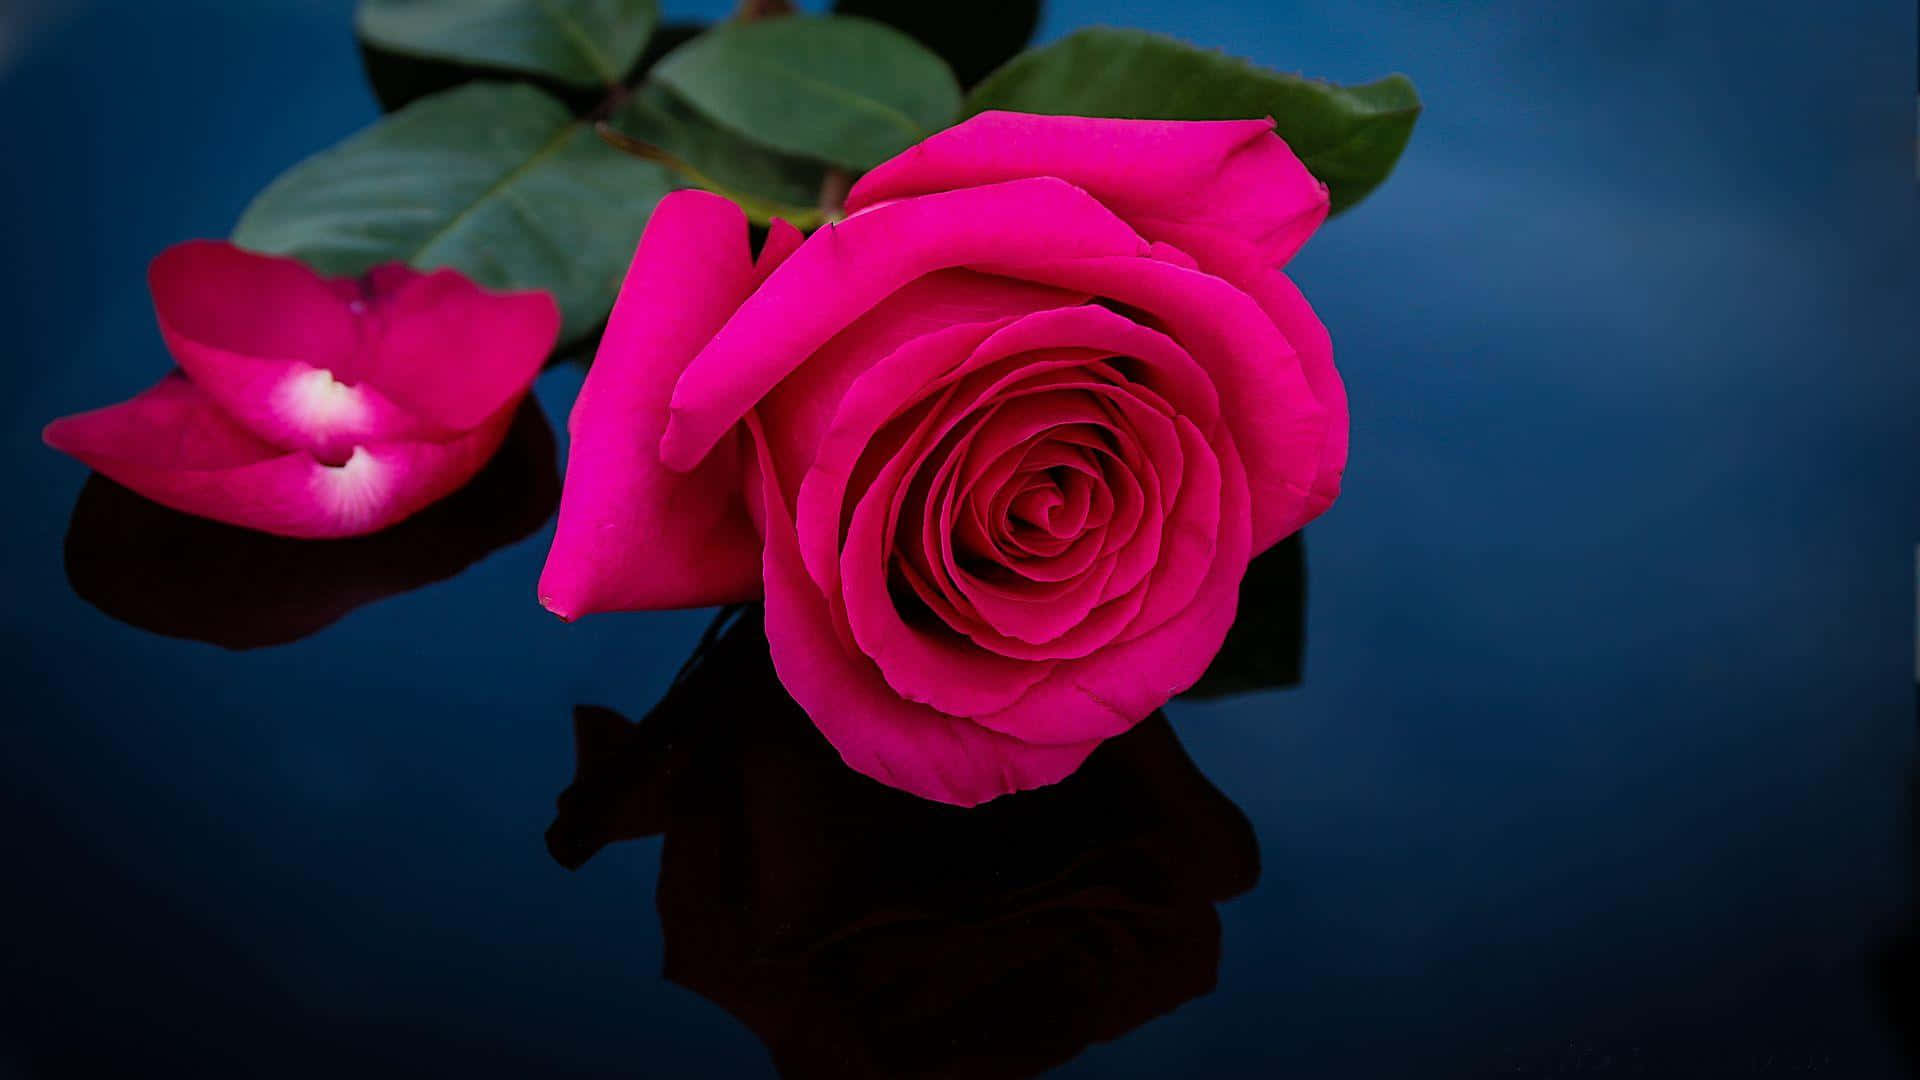 A Breathtakingly Beautiful Pink Rose